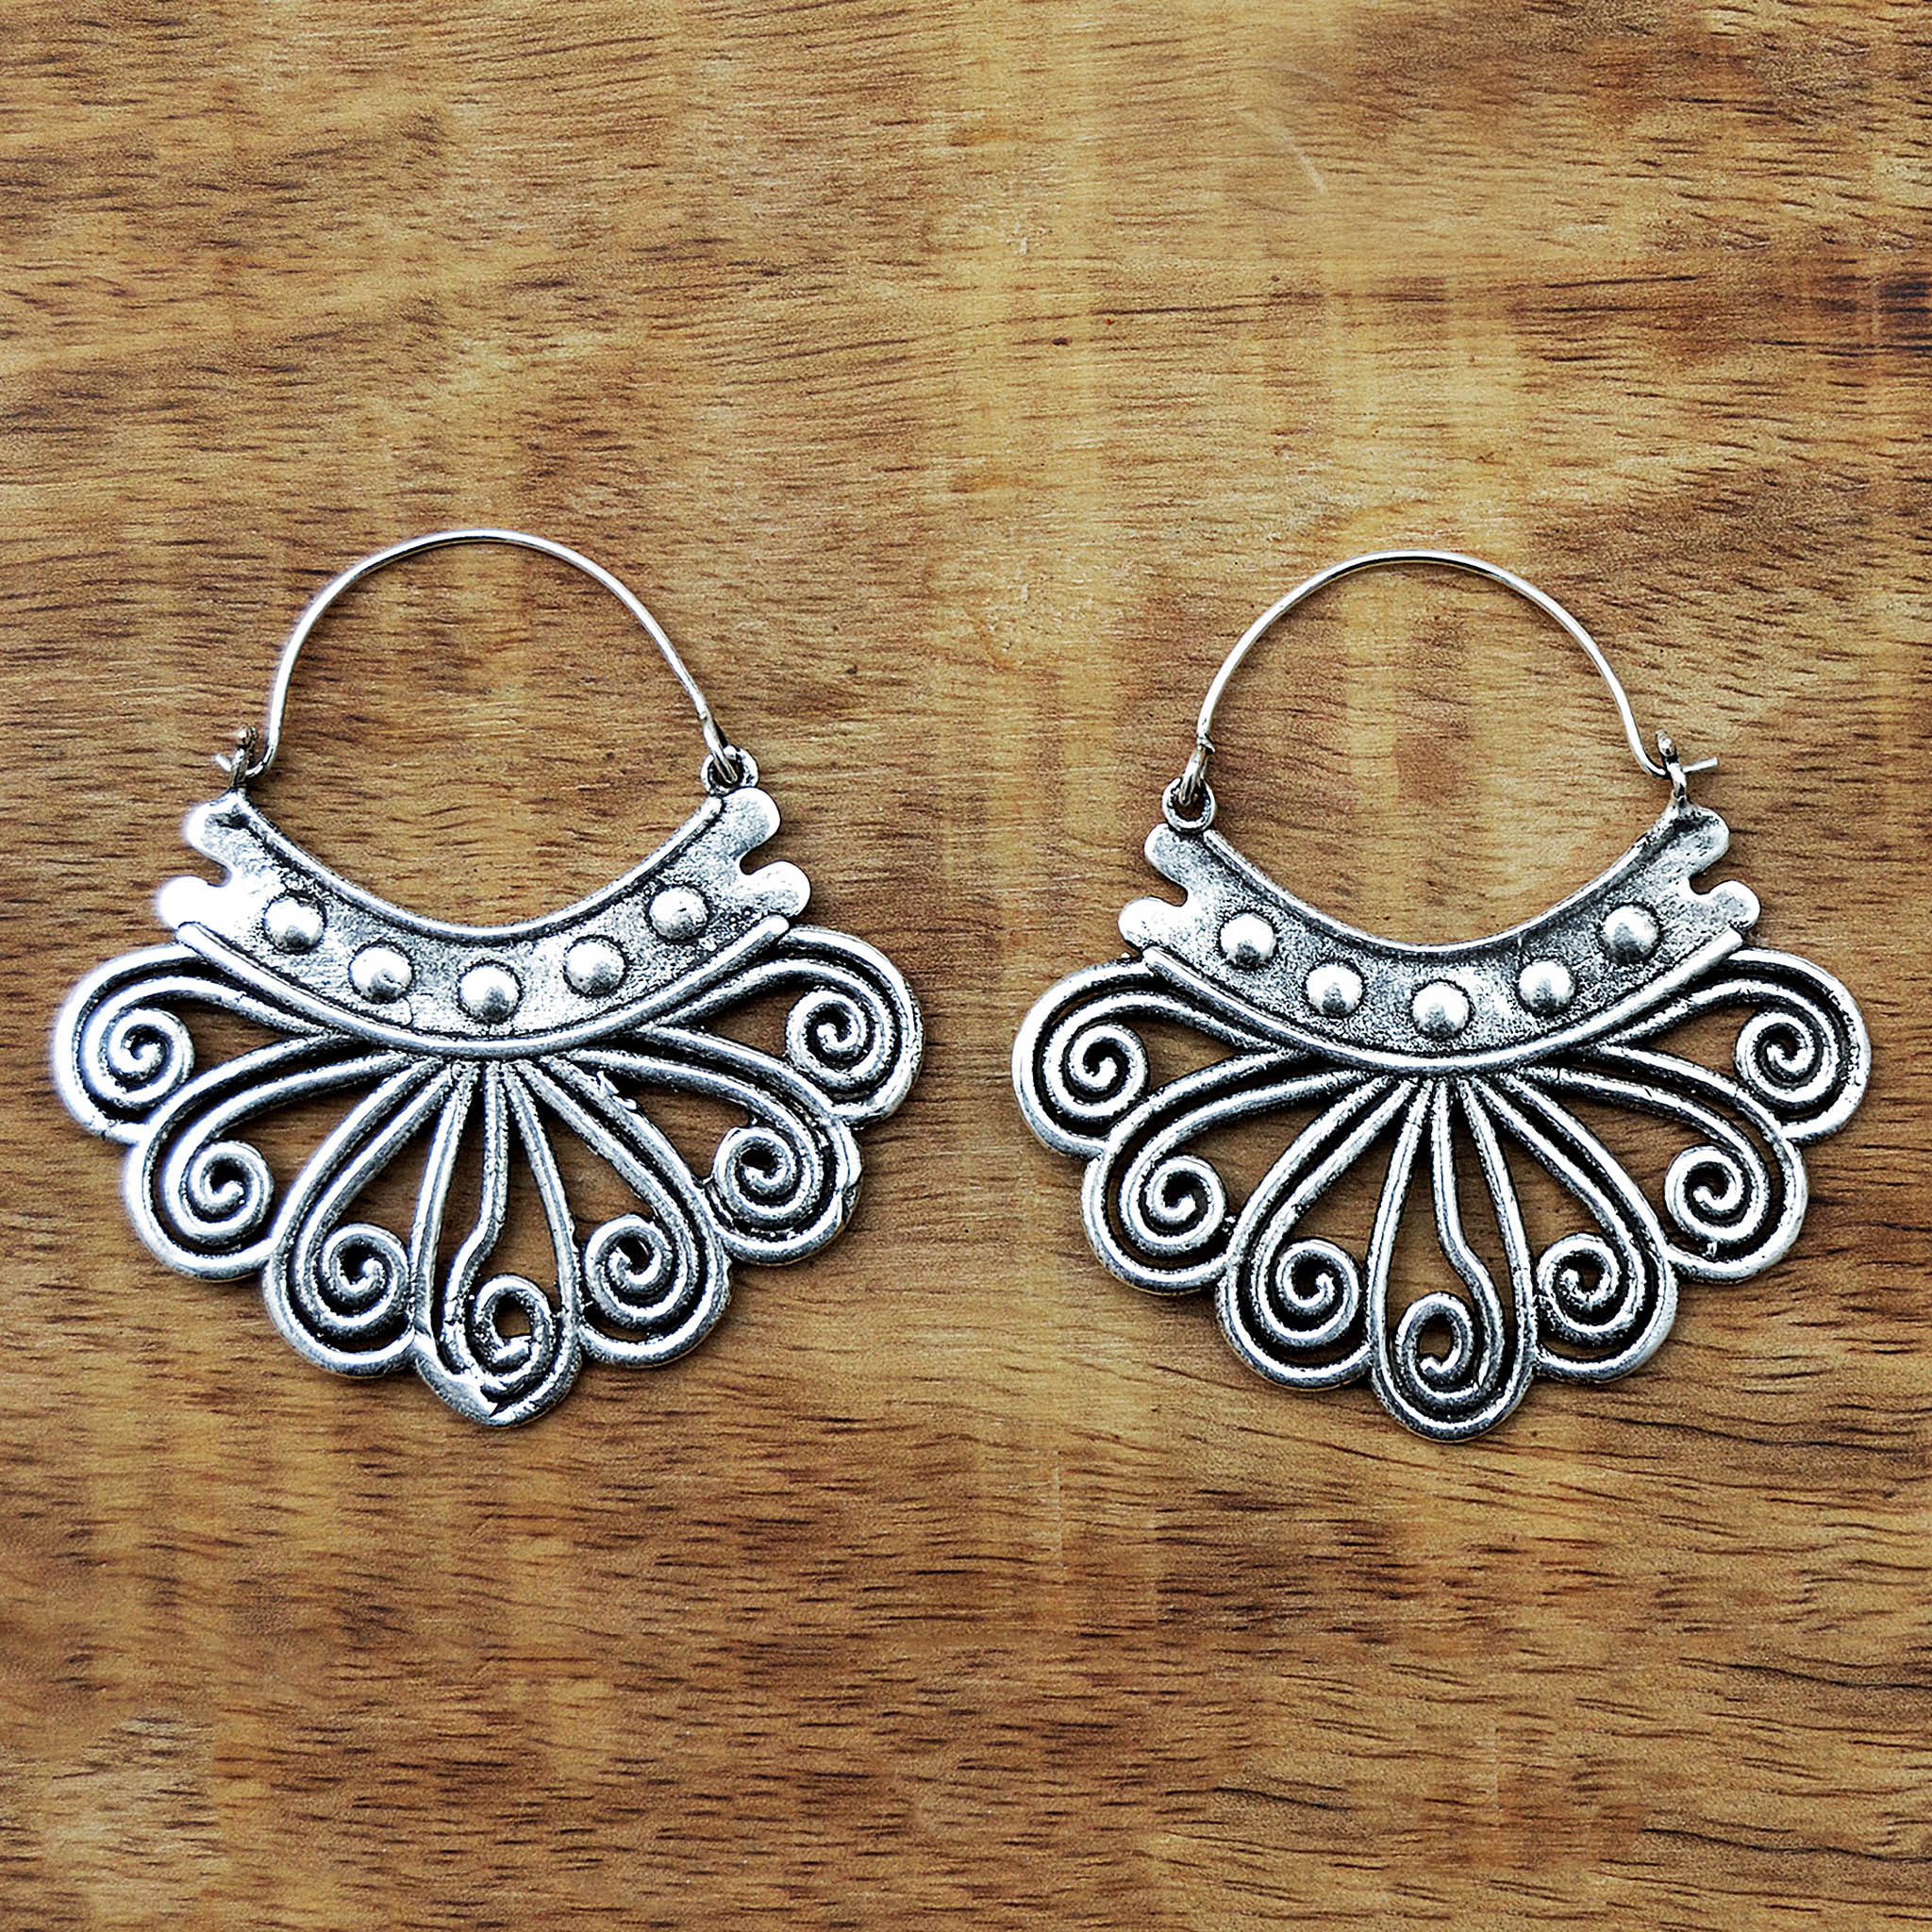 Gypsy hoop earrings